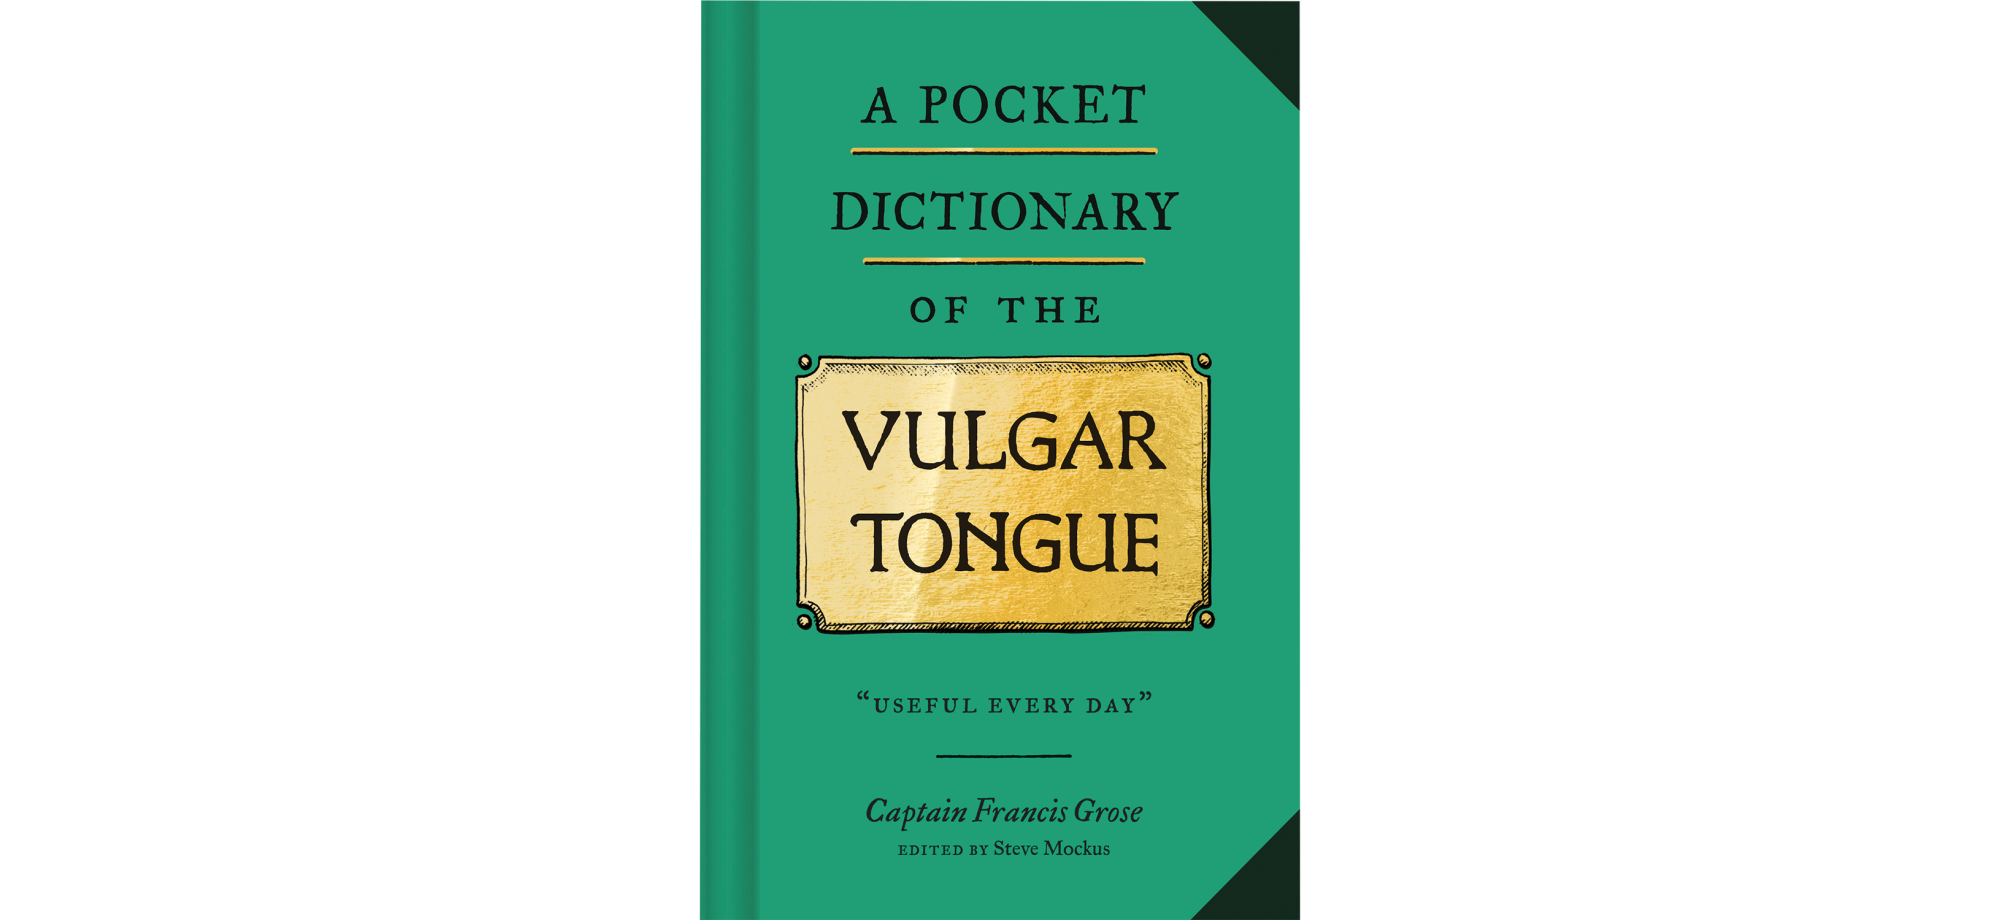 Book cover of "A Pocket Dictionary of the Vulgar Tongue"